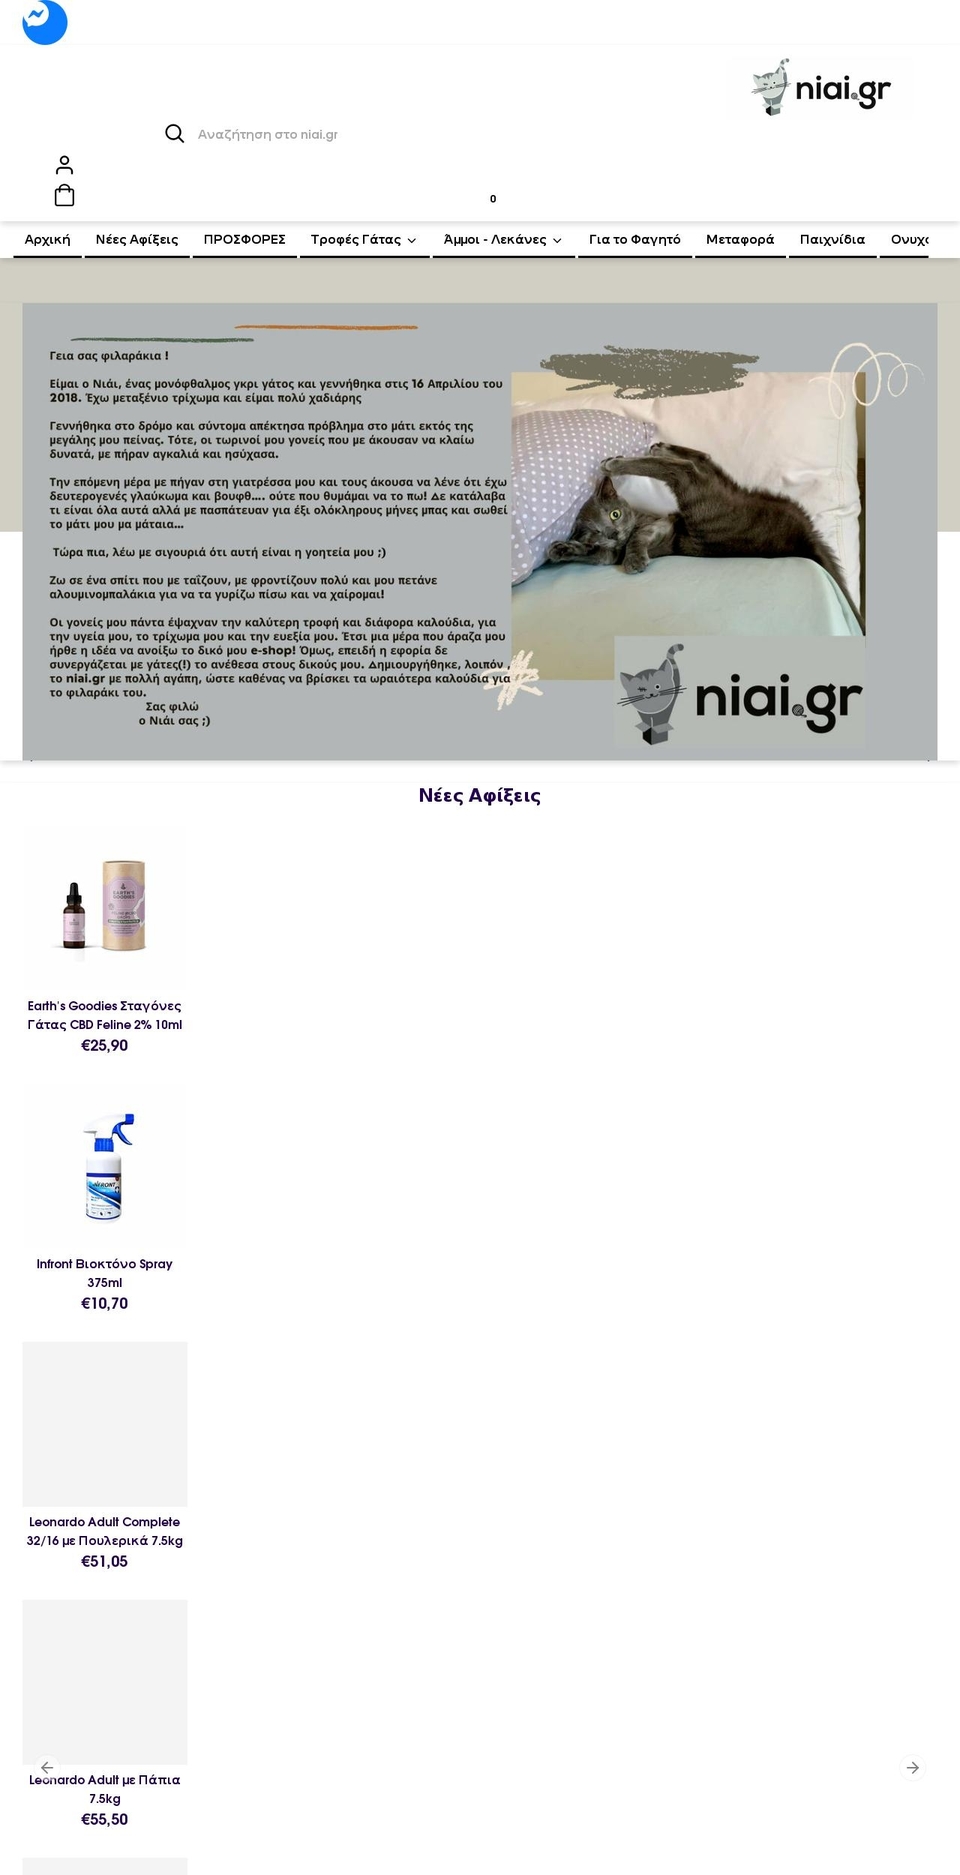 niai.gr shopify website screenshot